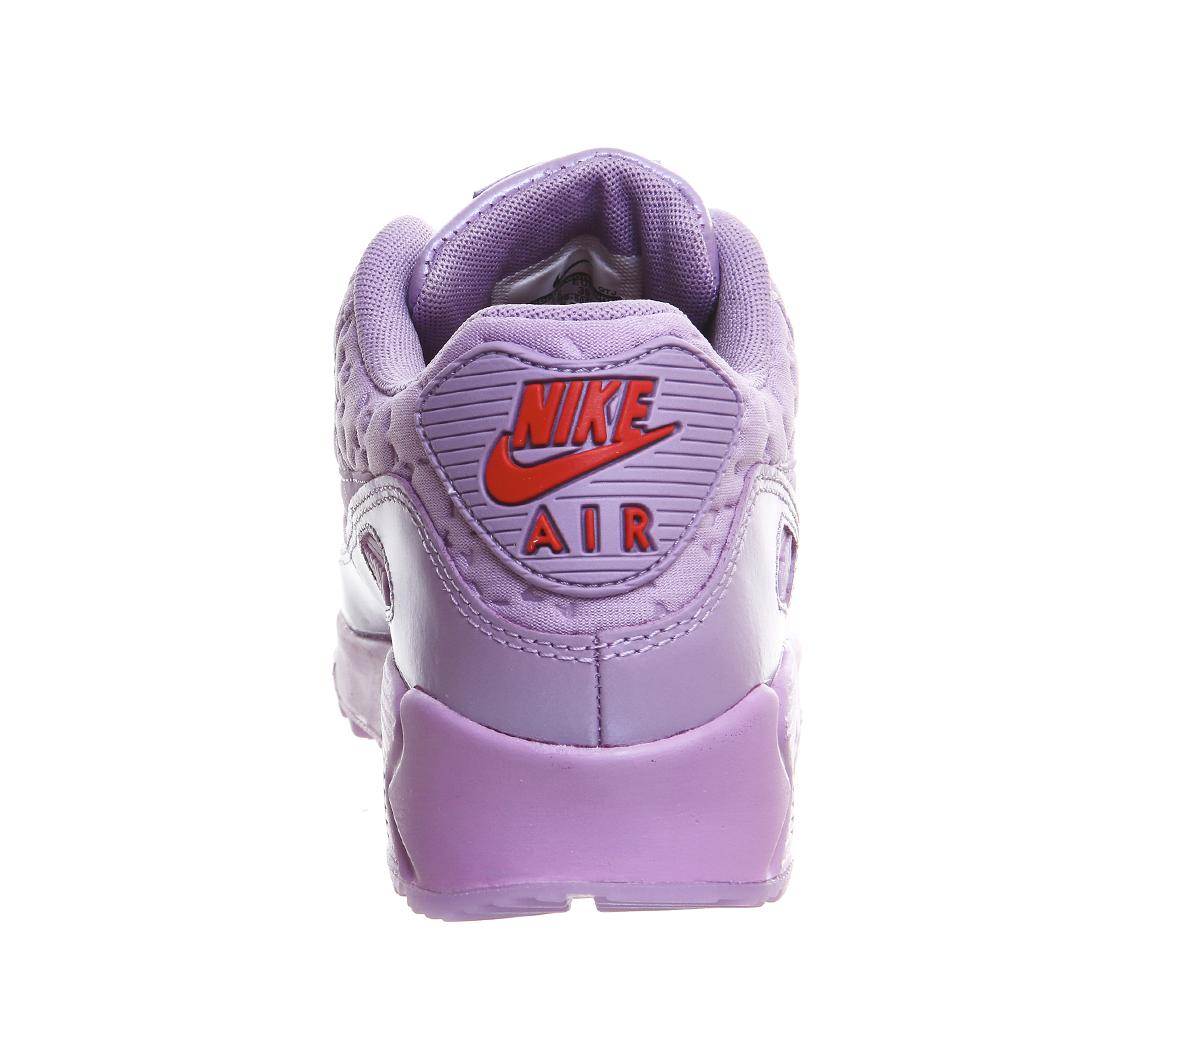 Nike Air Max 90 Macaron Low-Top Sneakers in Lavender (Purple) - Lyst